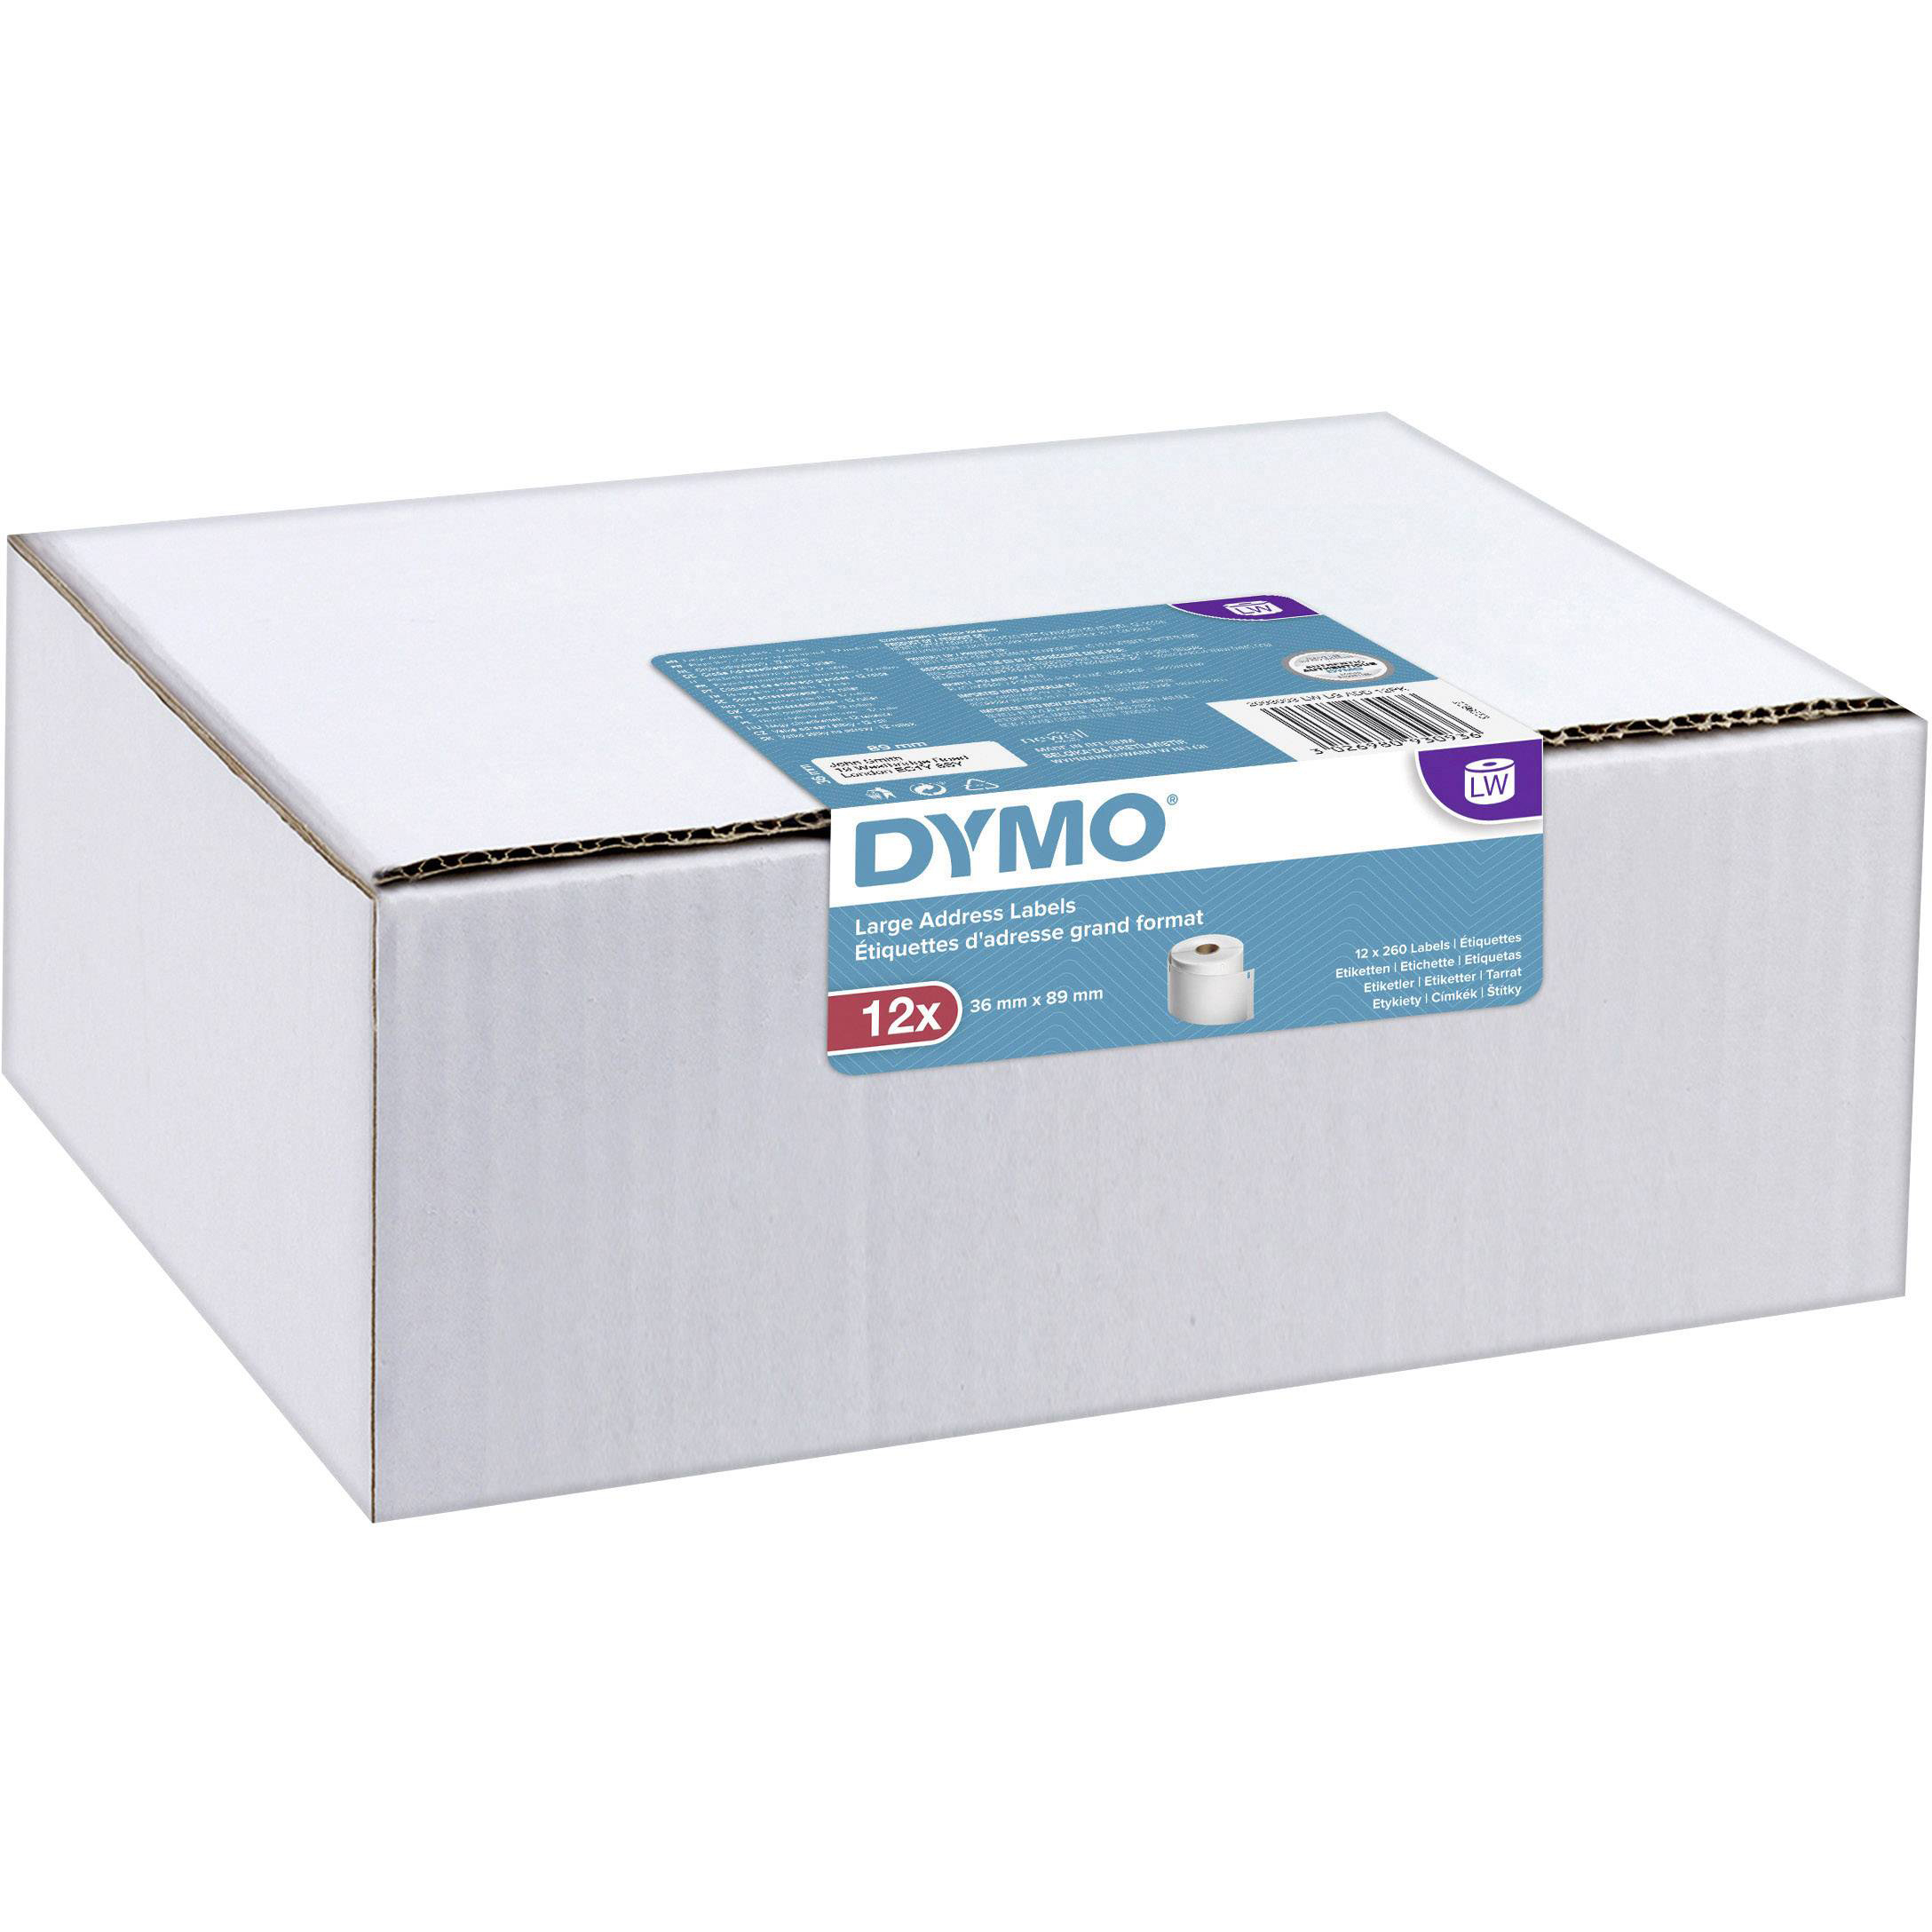 Original Dymo 99012 36 x 89mm Large Address Labels 12 Pack (2093093)